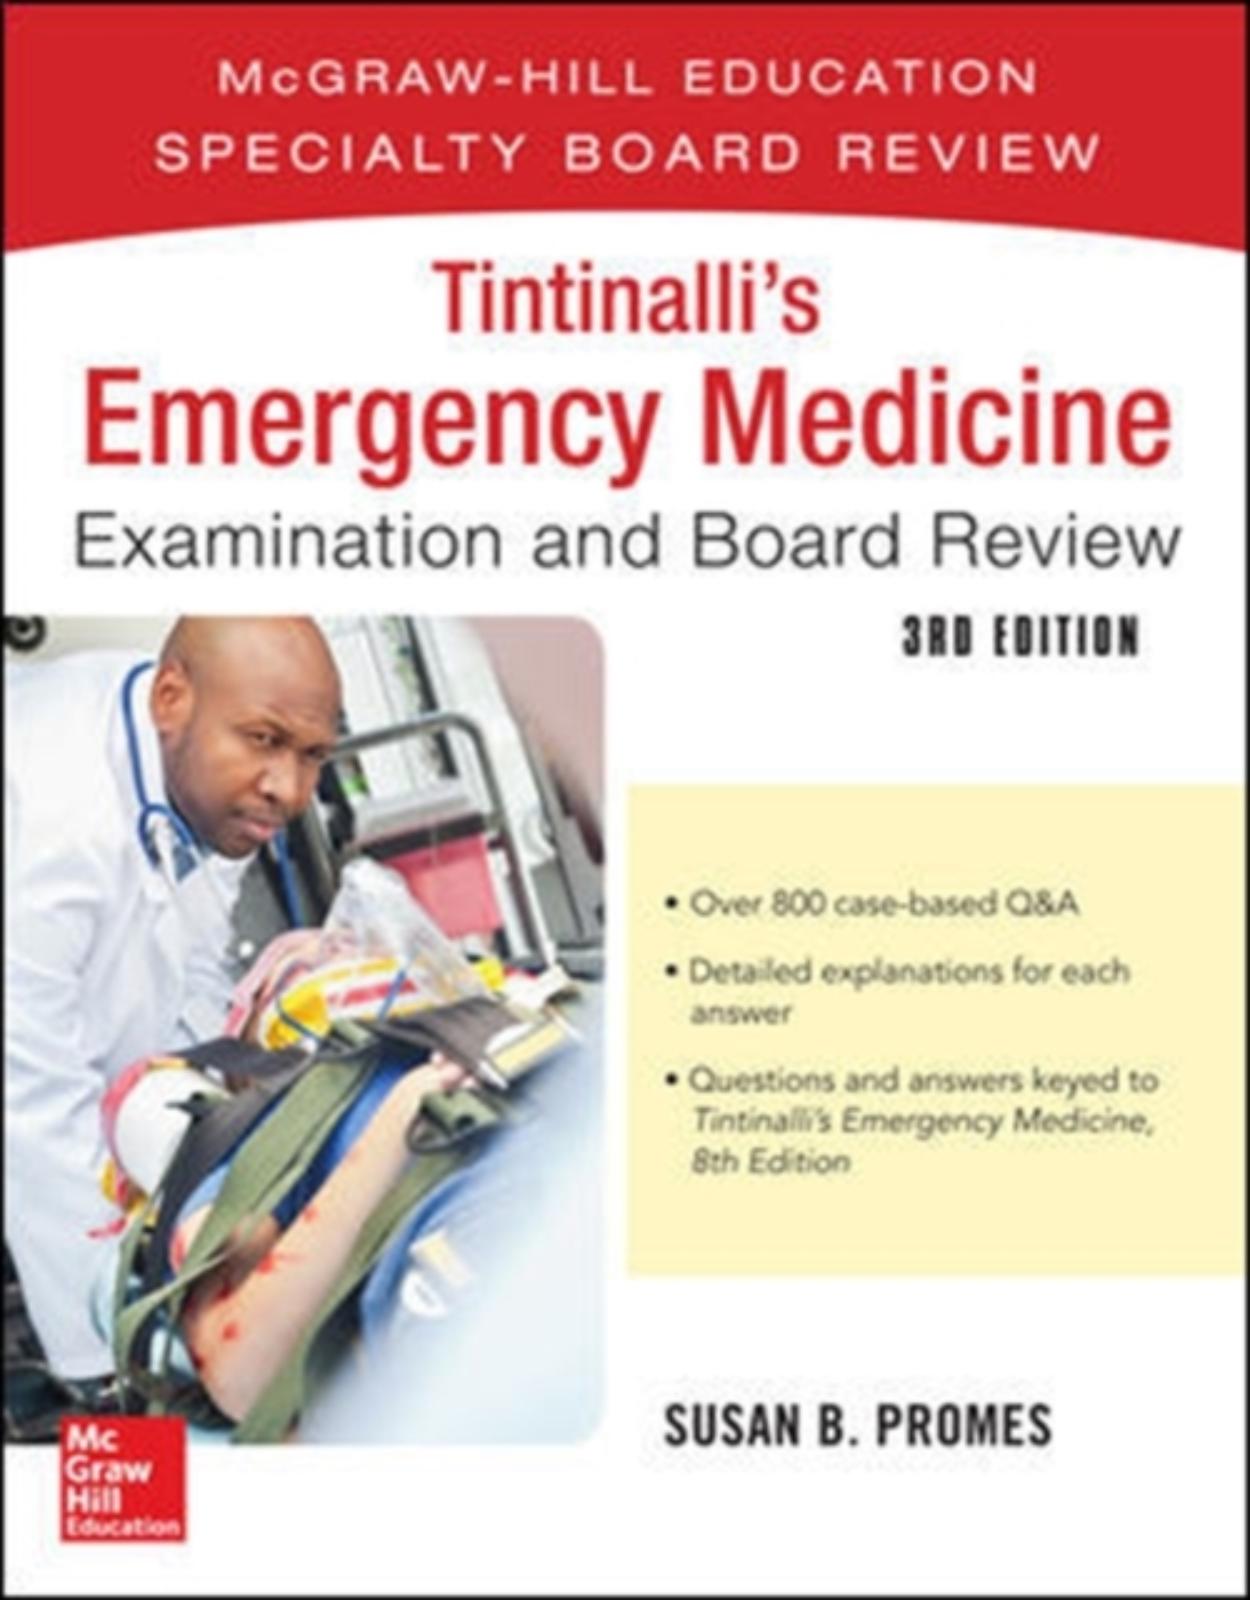 Tintinalli’s Emergency Medicine Examination and Board Review